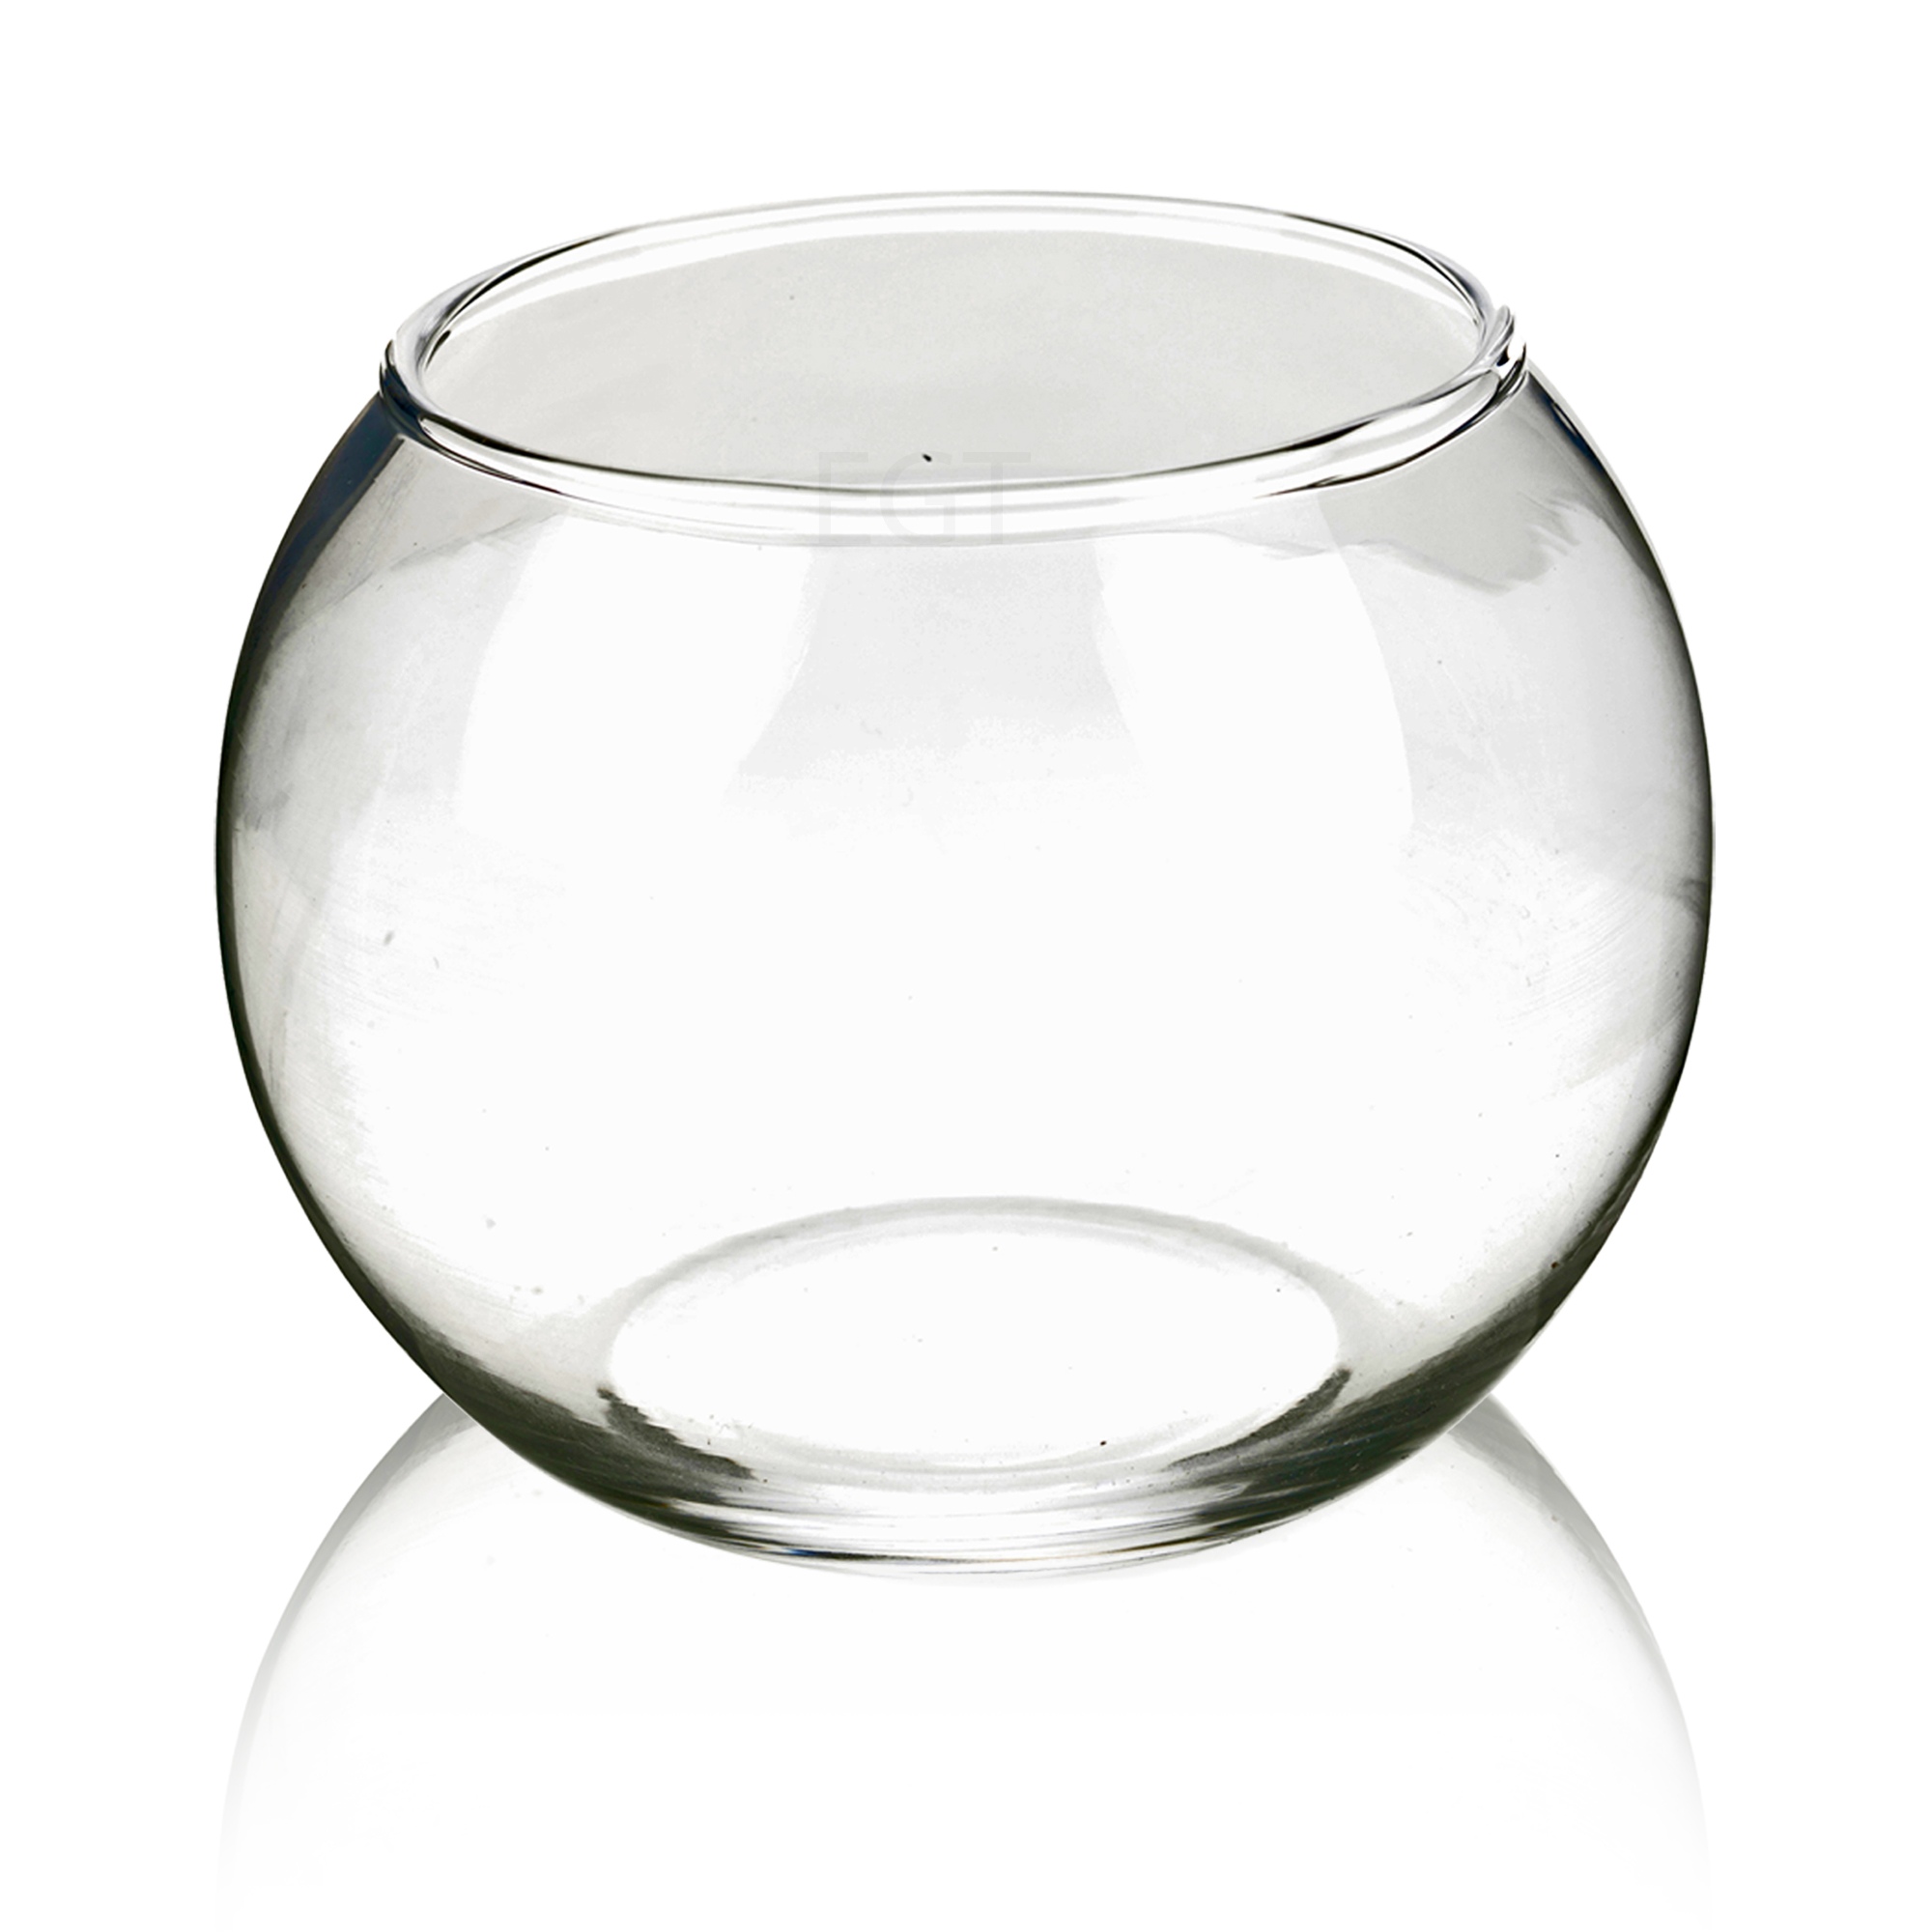 3 Round Glass Candle Holder Bowl Table Elegant Centrepiece Tea Light Wedding Ebay